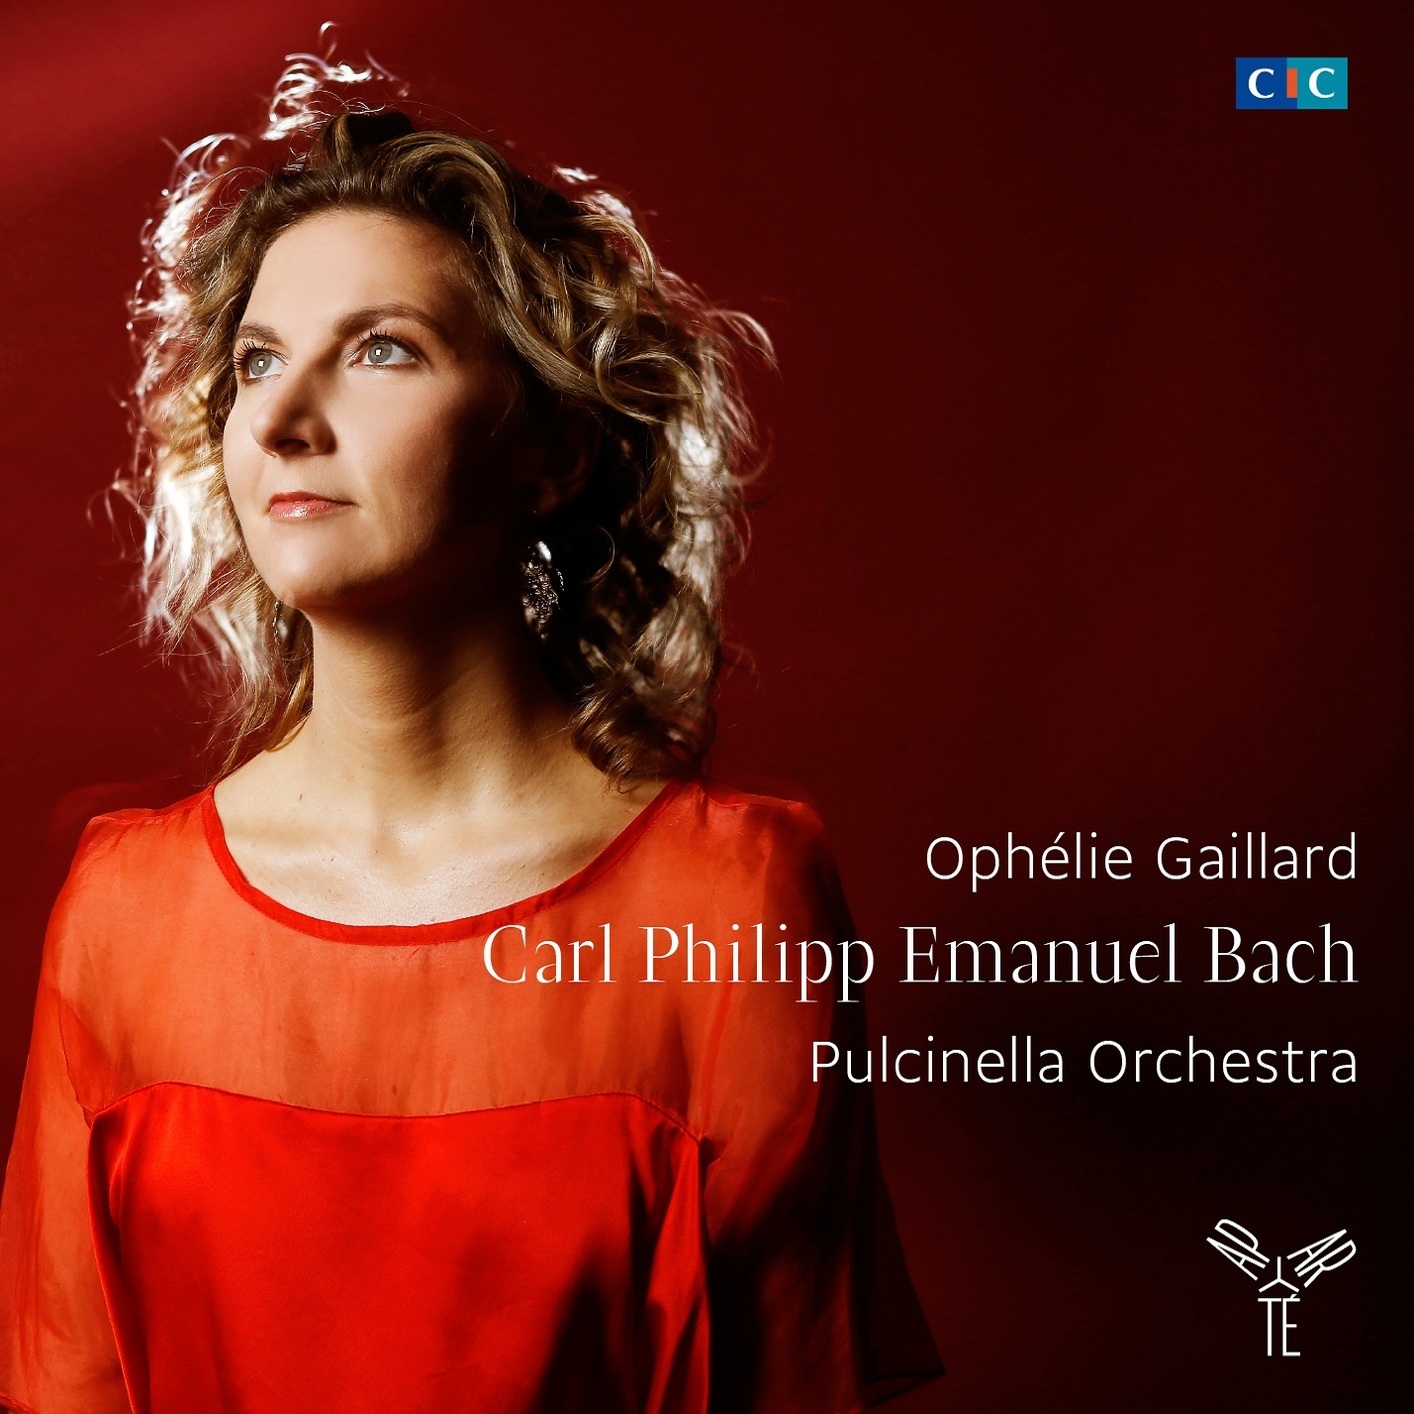 Carl Philipp Emanuel Bach Album Of Ophelie Gaillard Buy Or Stream Highresaudio